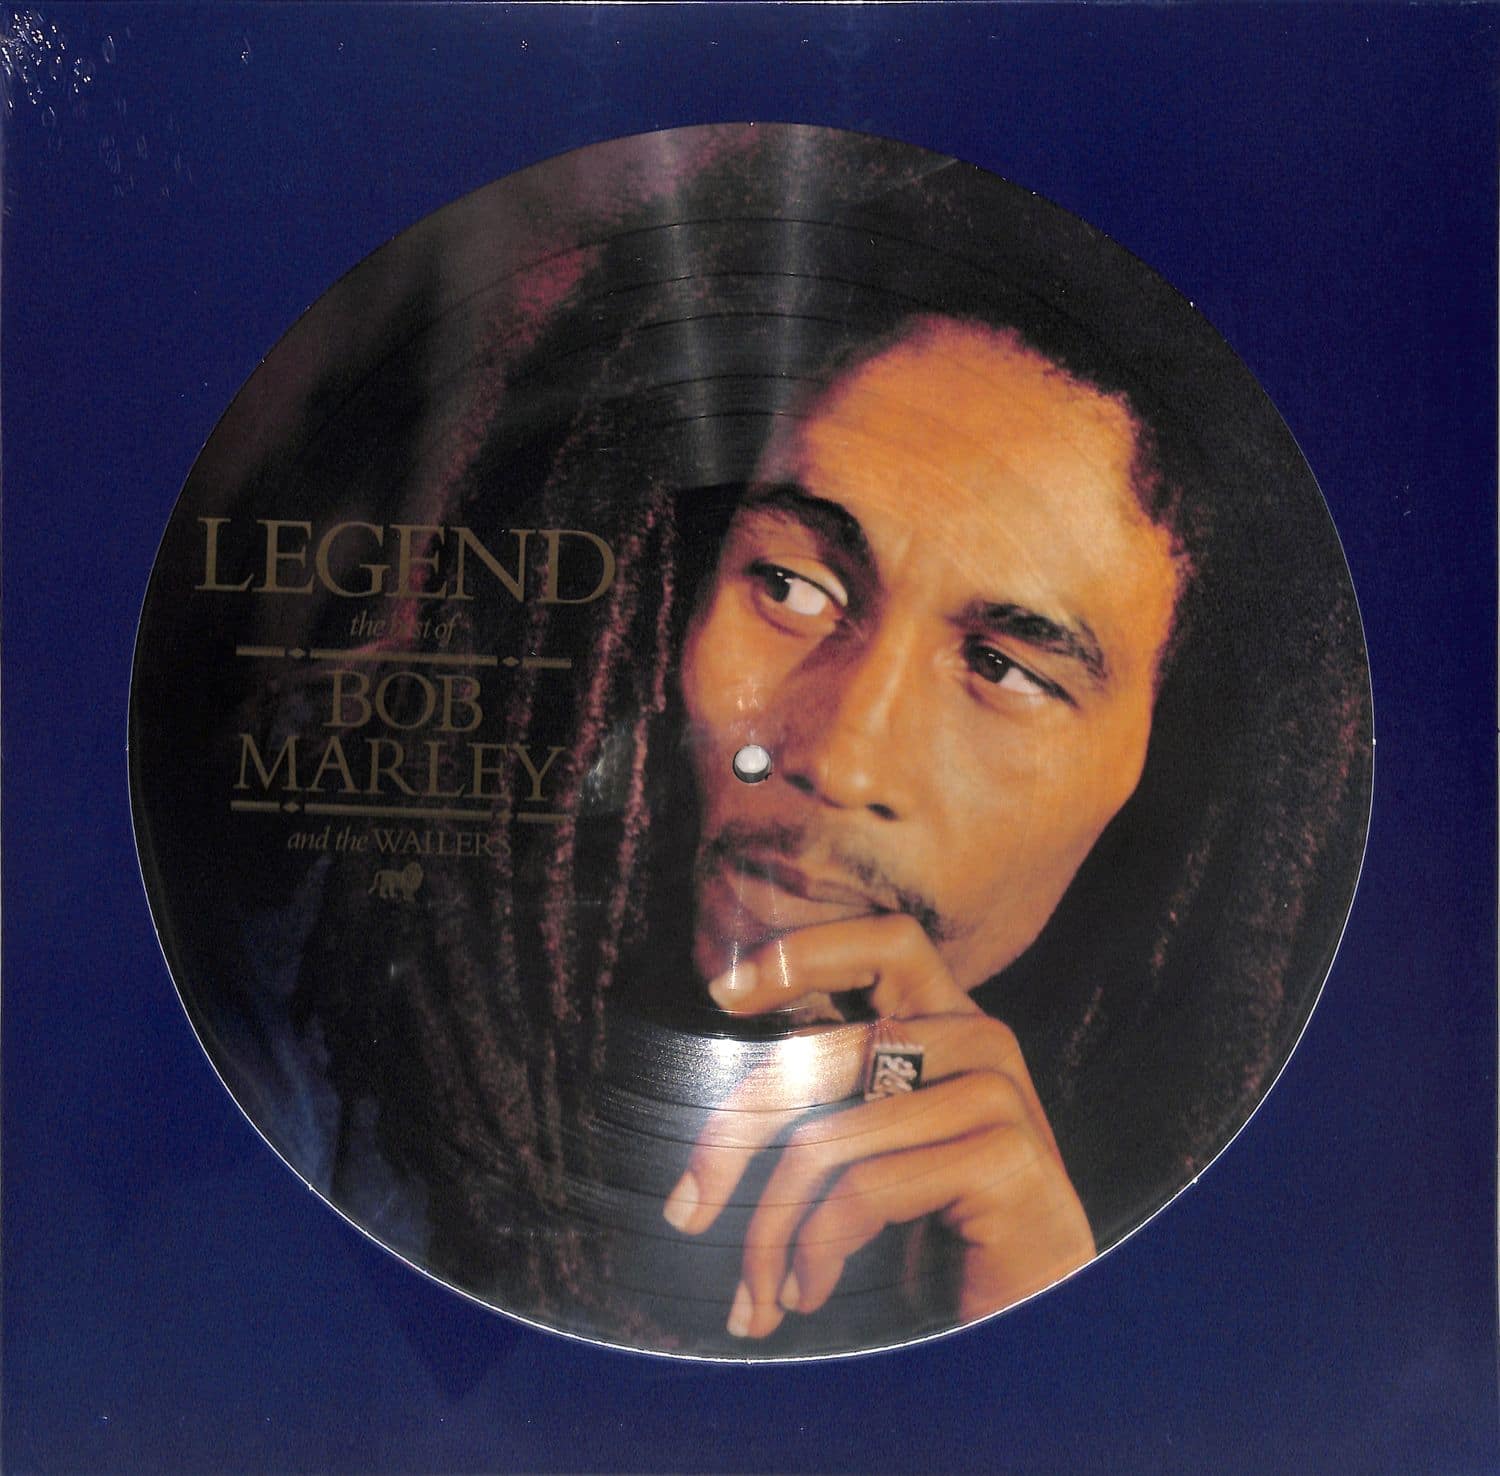 Bob Marley & The Wailers - LEGEND 